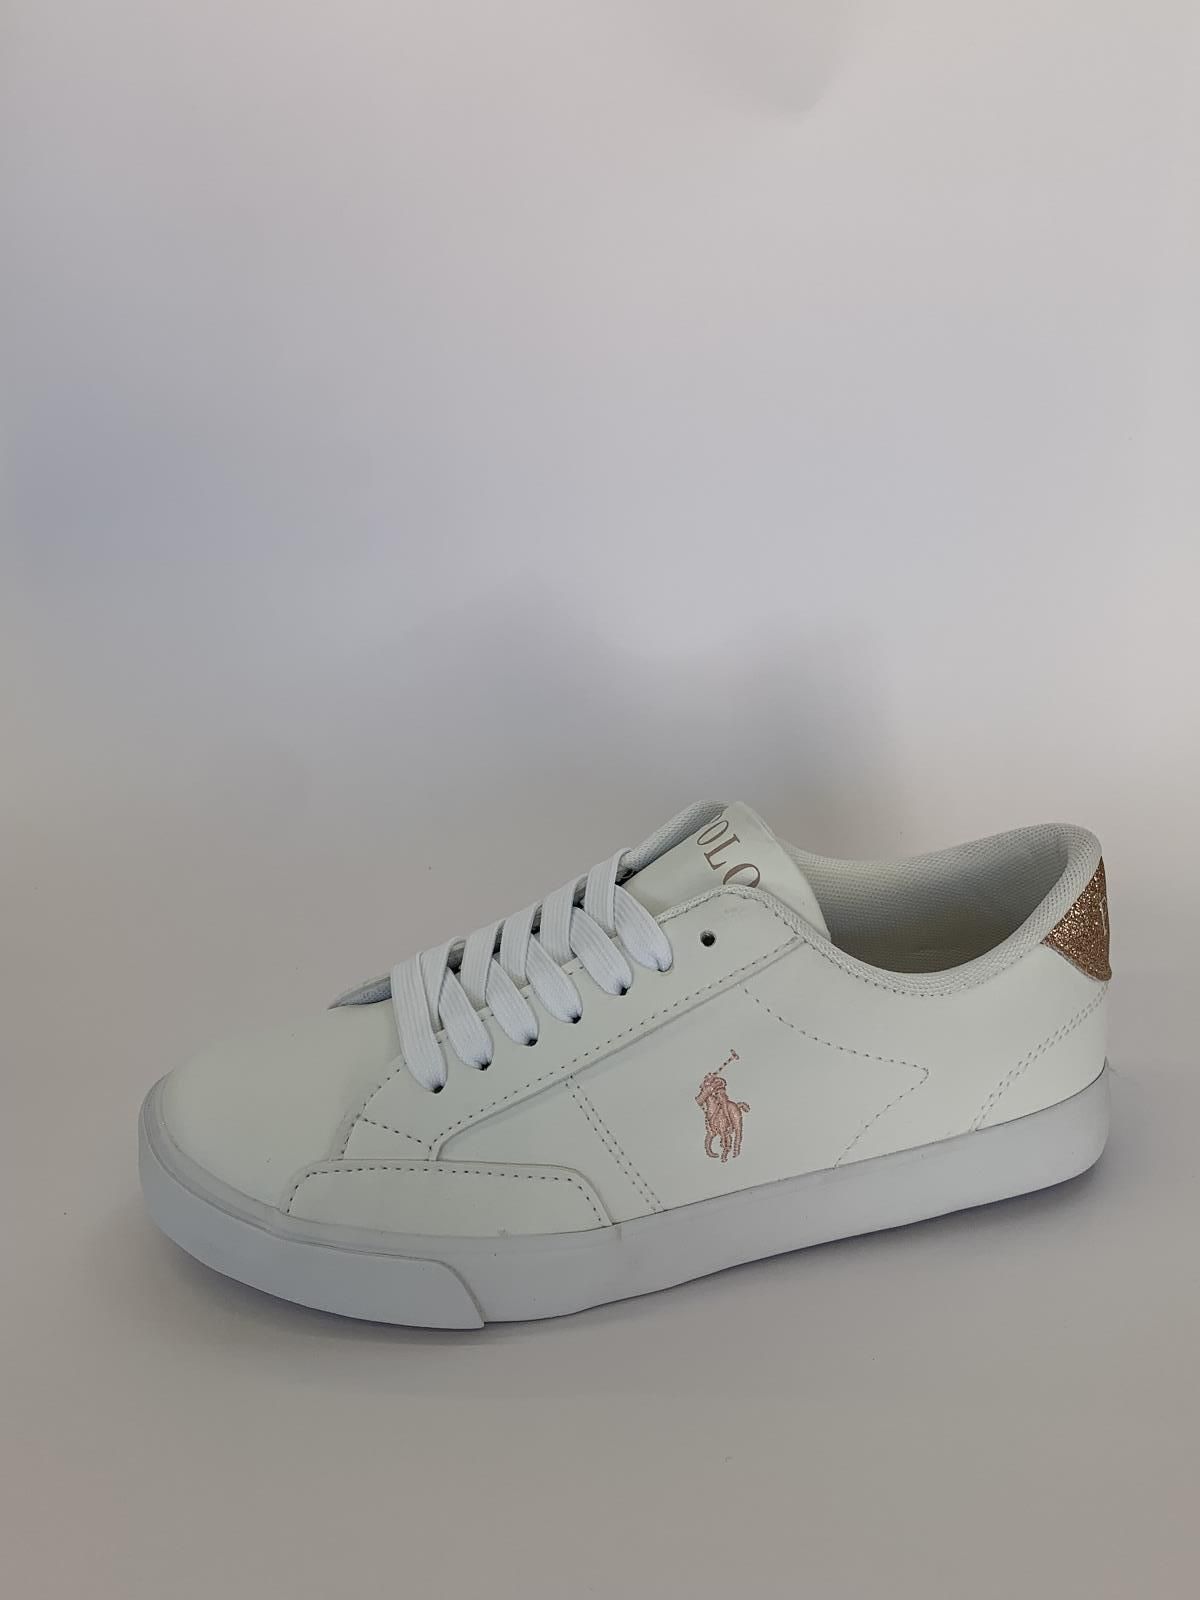 Ralph Lauren Sneaker Wit dames (Veter Polo Wit-Rosé Glit - Theron) - Schoenen Luca